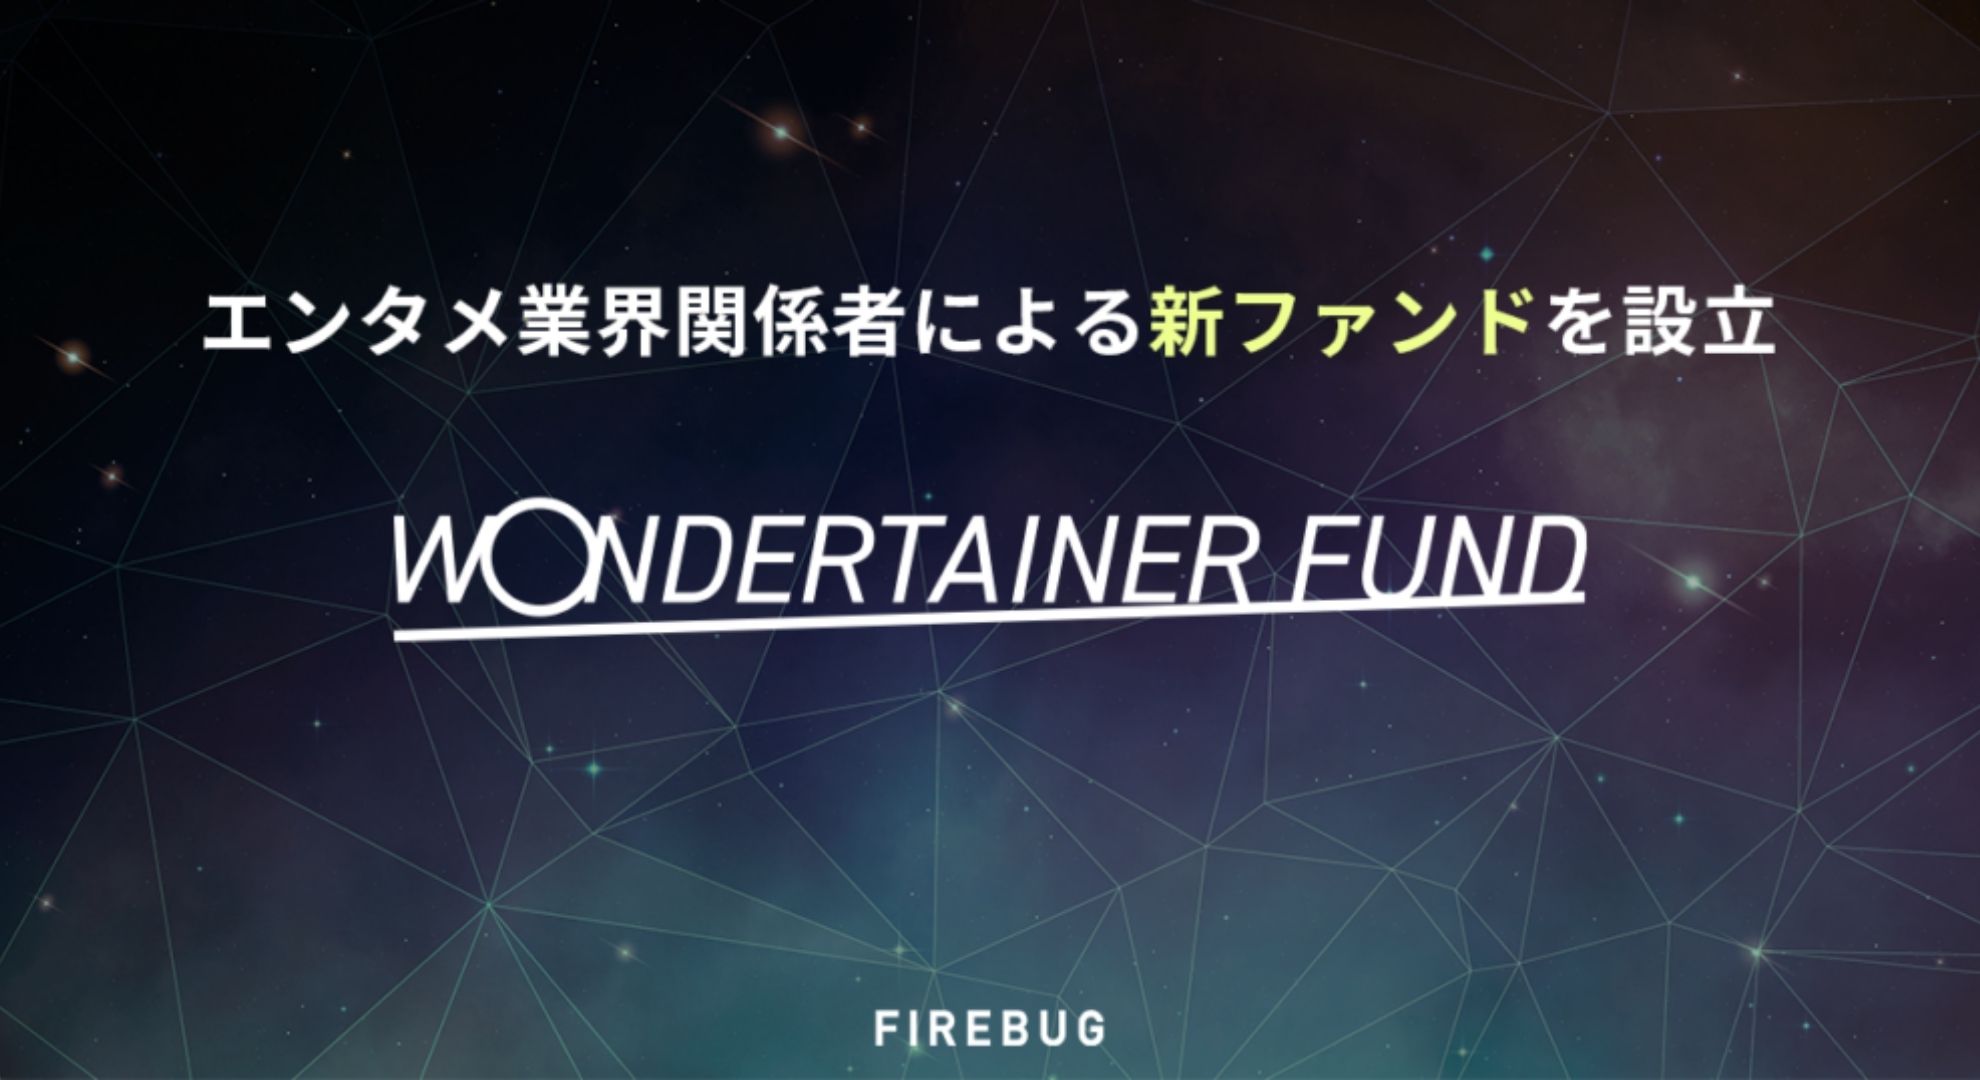 FIREBUG、エンタメ業界関係者による新ファンド「WONDERTAINER FUND」設立 次世代のエンターテイナーが活躍の場づくりを推進～第一号案件として株式会社レターファンへの出資を決定～